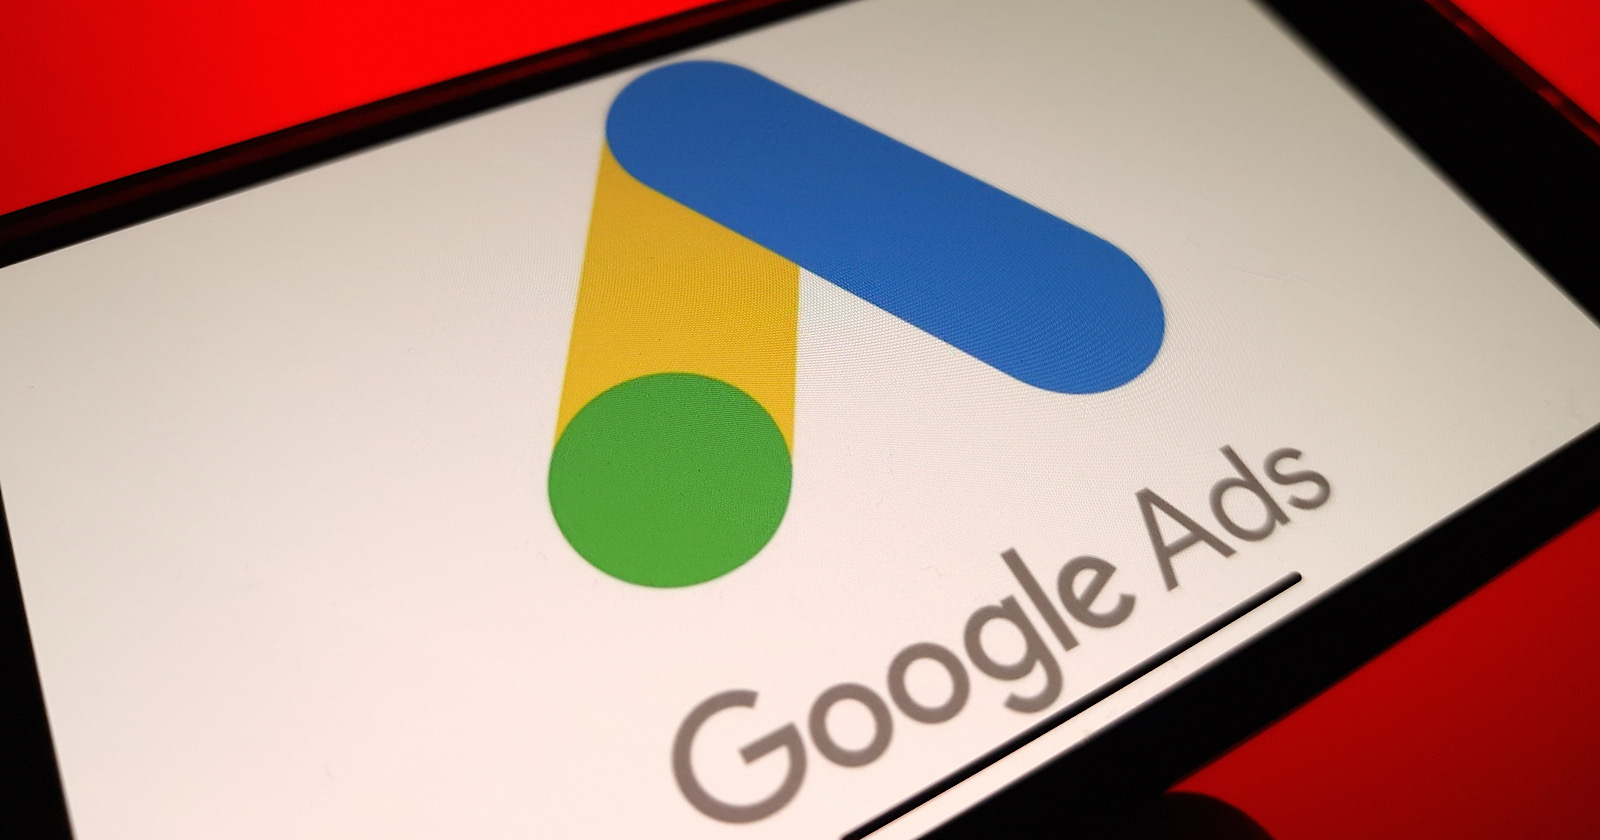 Google Ads logo displayed on mobile phone screen